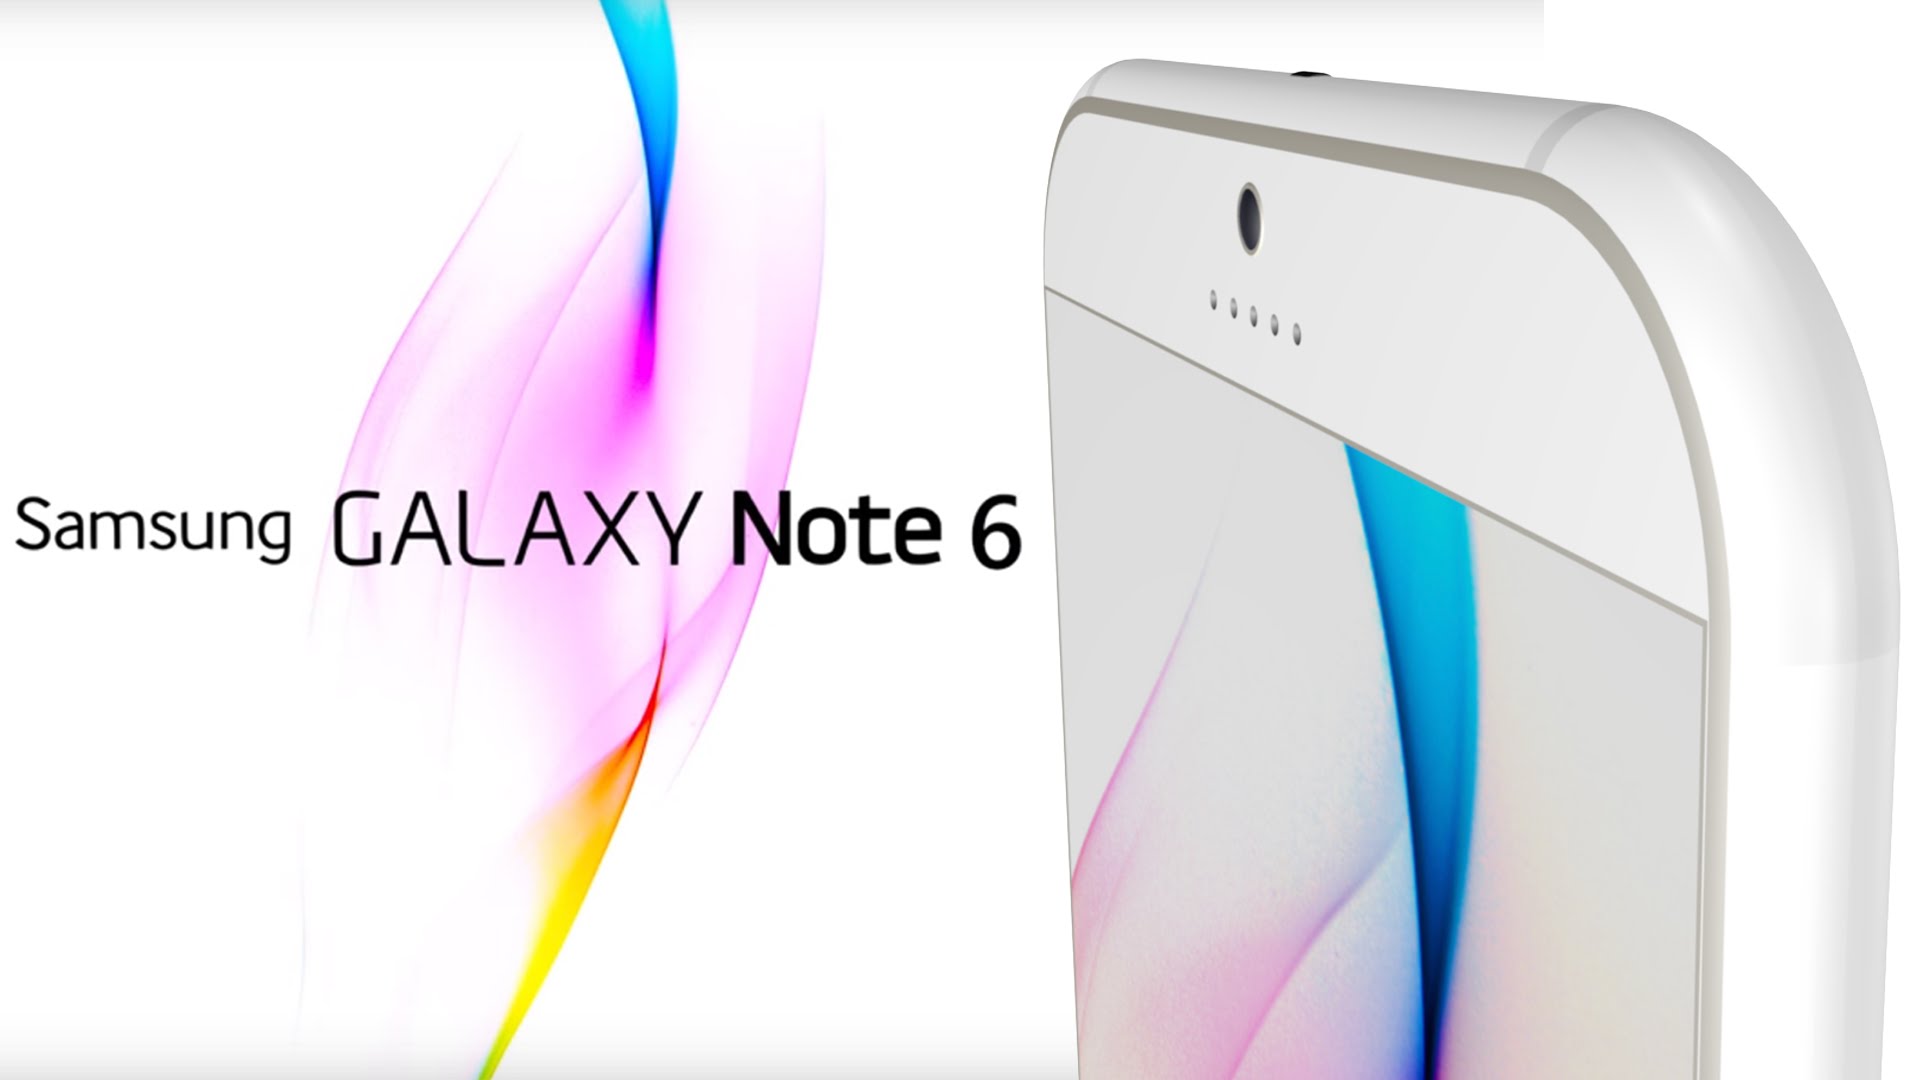 Galaxy Note 6 - SD823 SoC